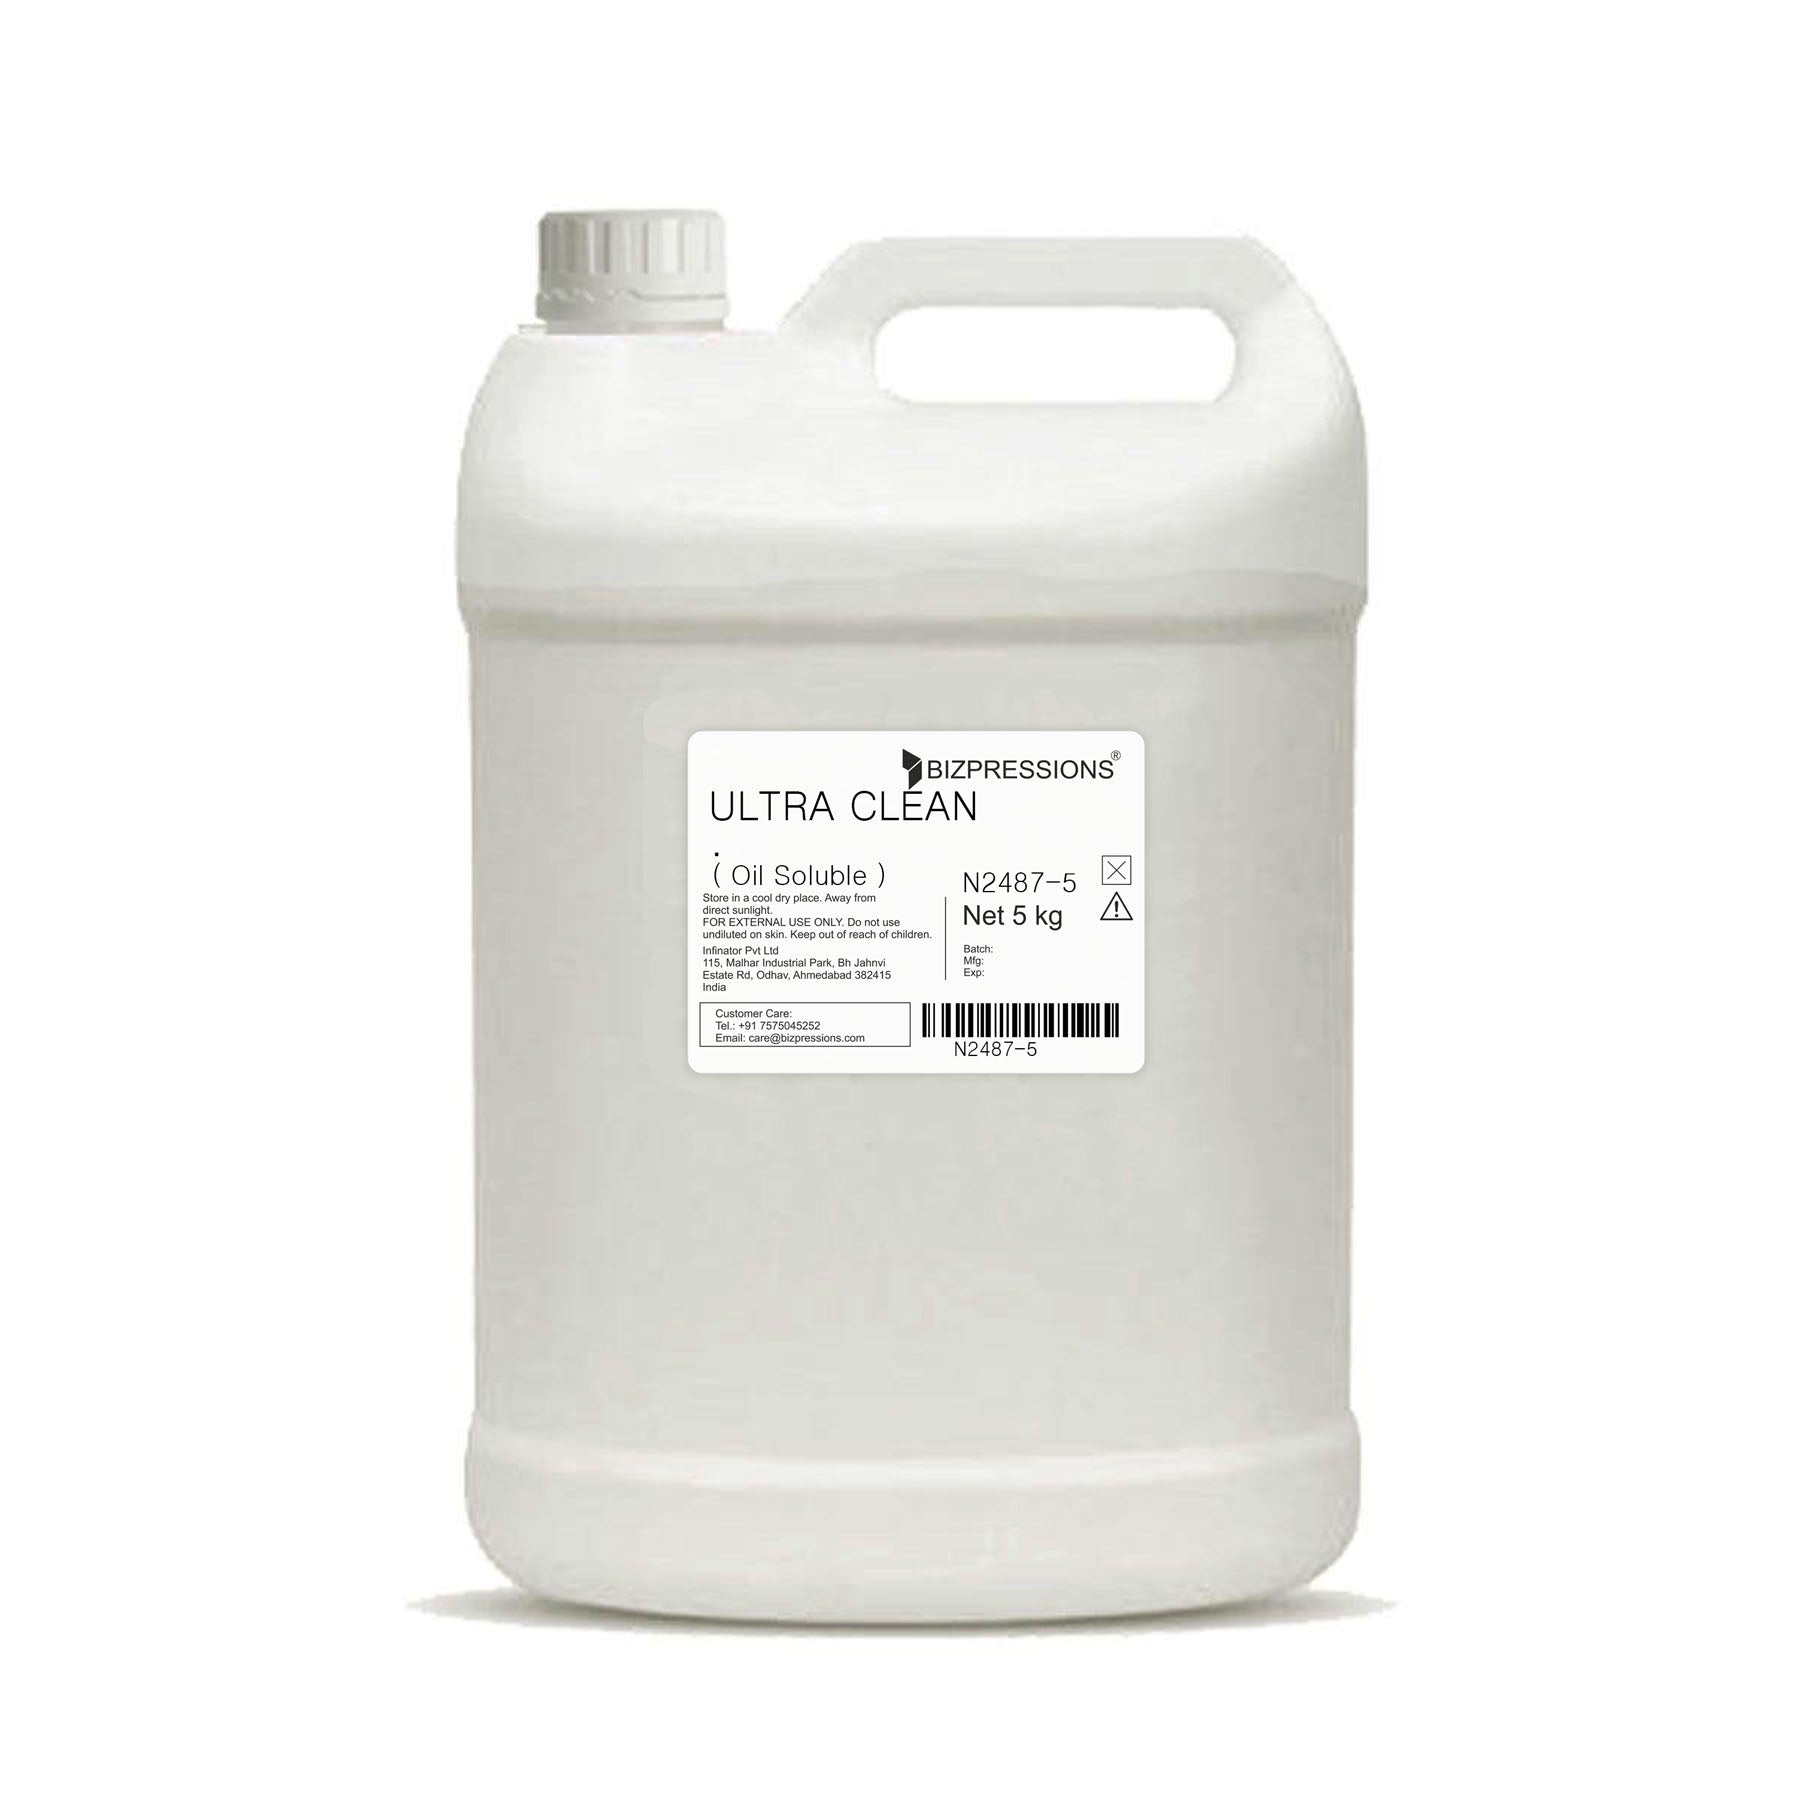 ULTRA CLEAN - Fragrance ( Oil Soluble ) - 5 kg